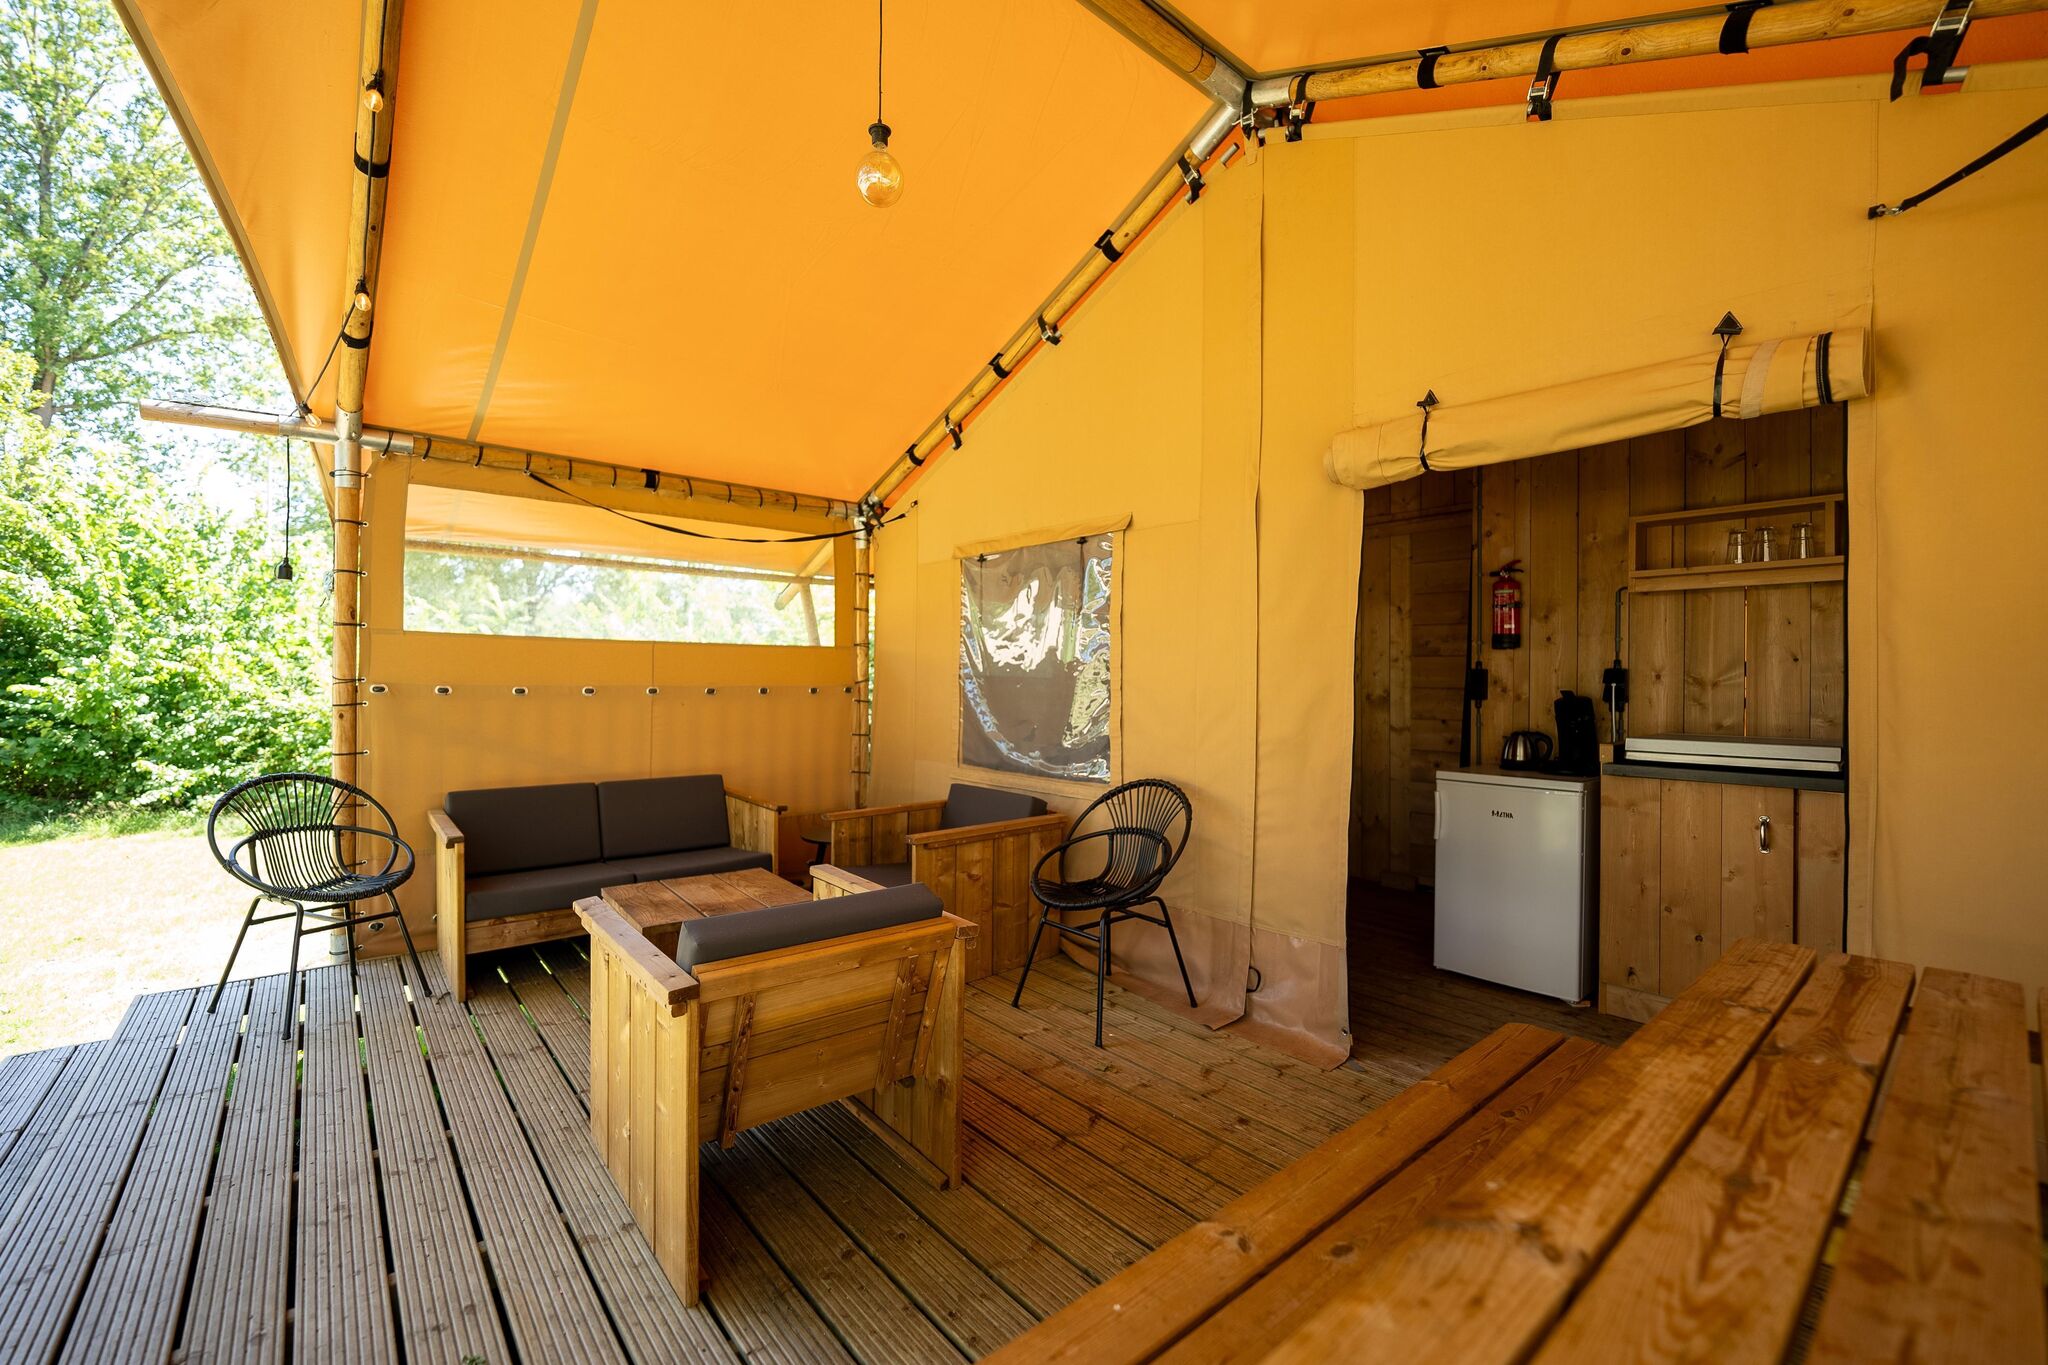 Nice safari tent with bathroom, at Hunebedcentrum